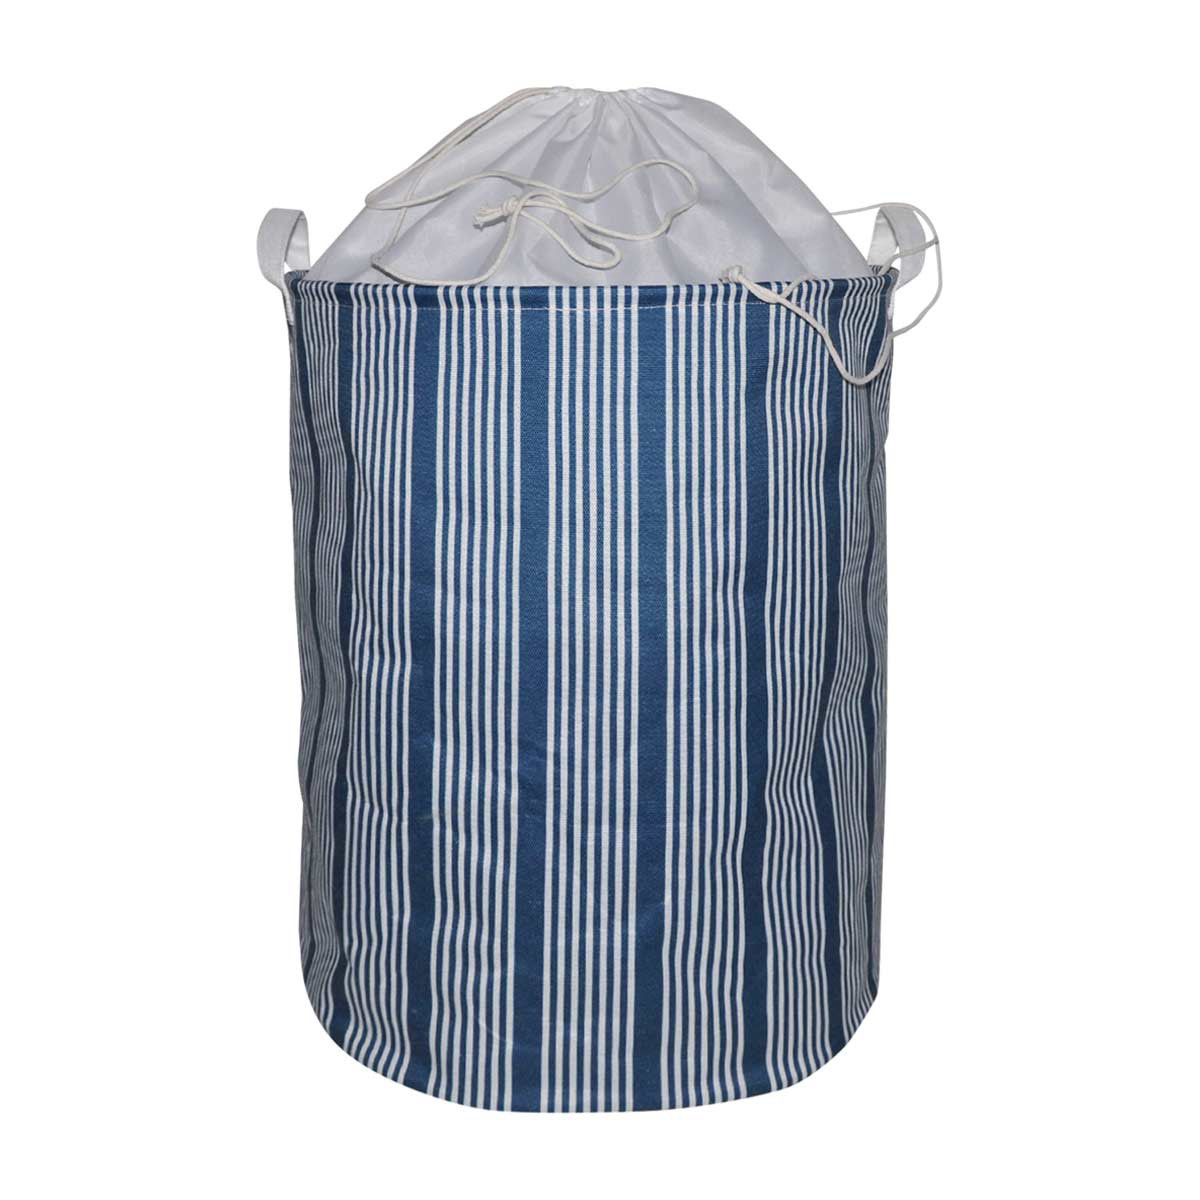 Striped Round Fabric Laundry Hamper, Large